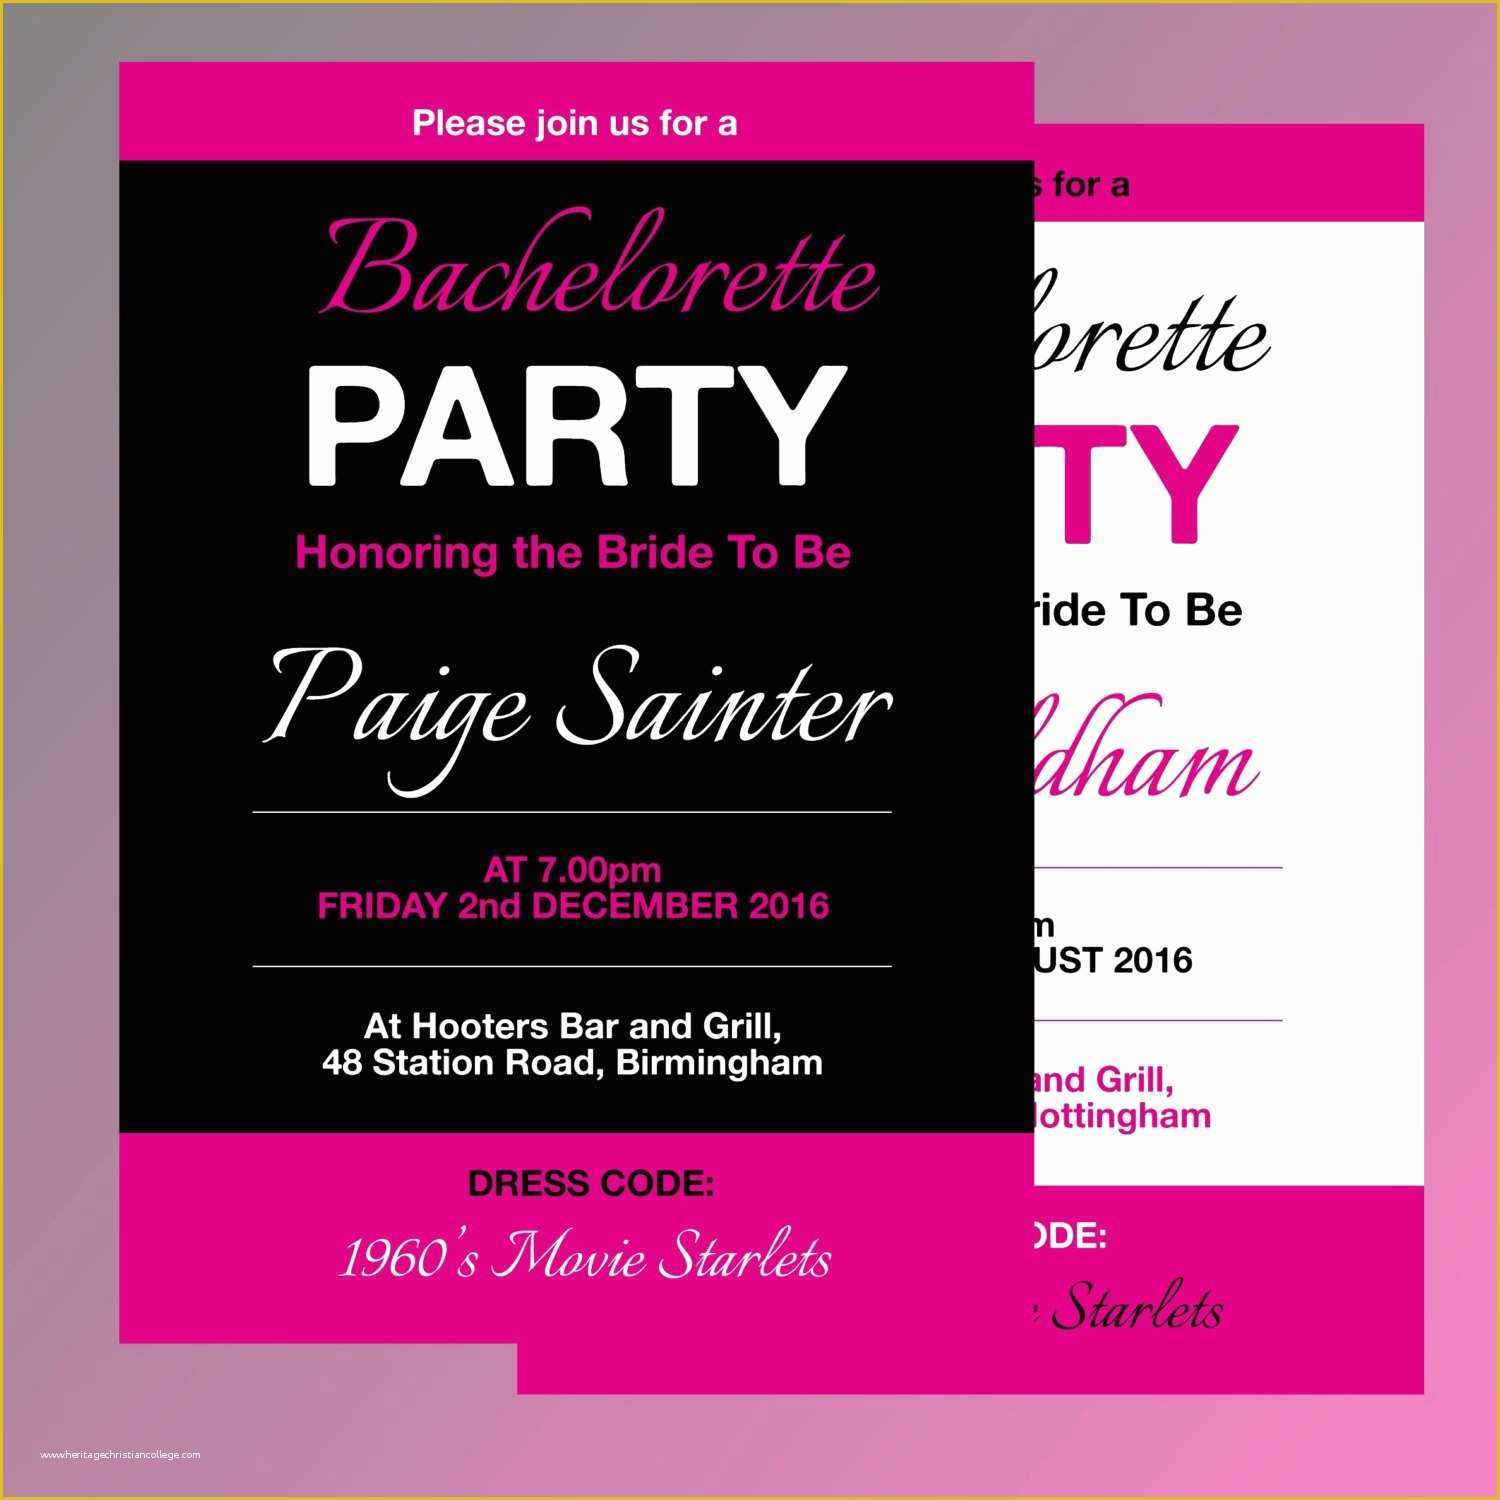 Bachelorette Party Invitation Templates Free Download Of Fully Editable Bachelorette Party Invitation Template